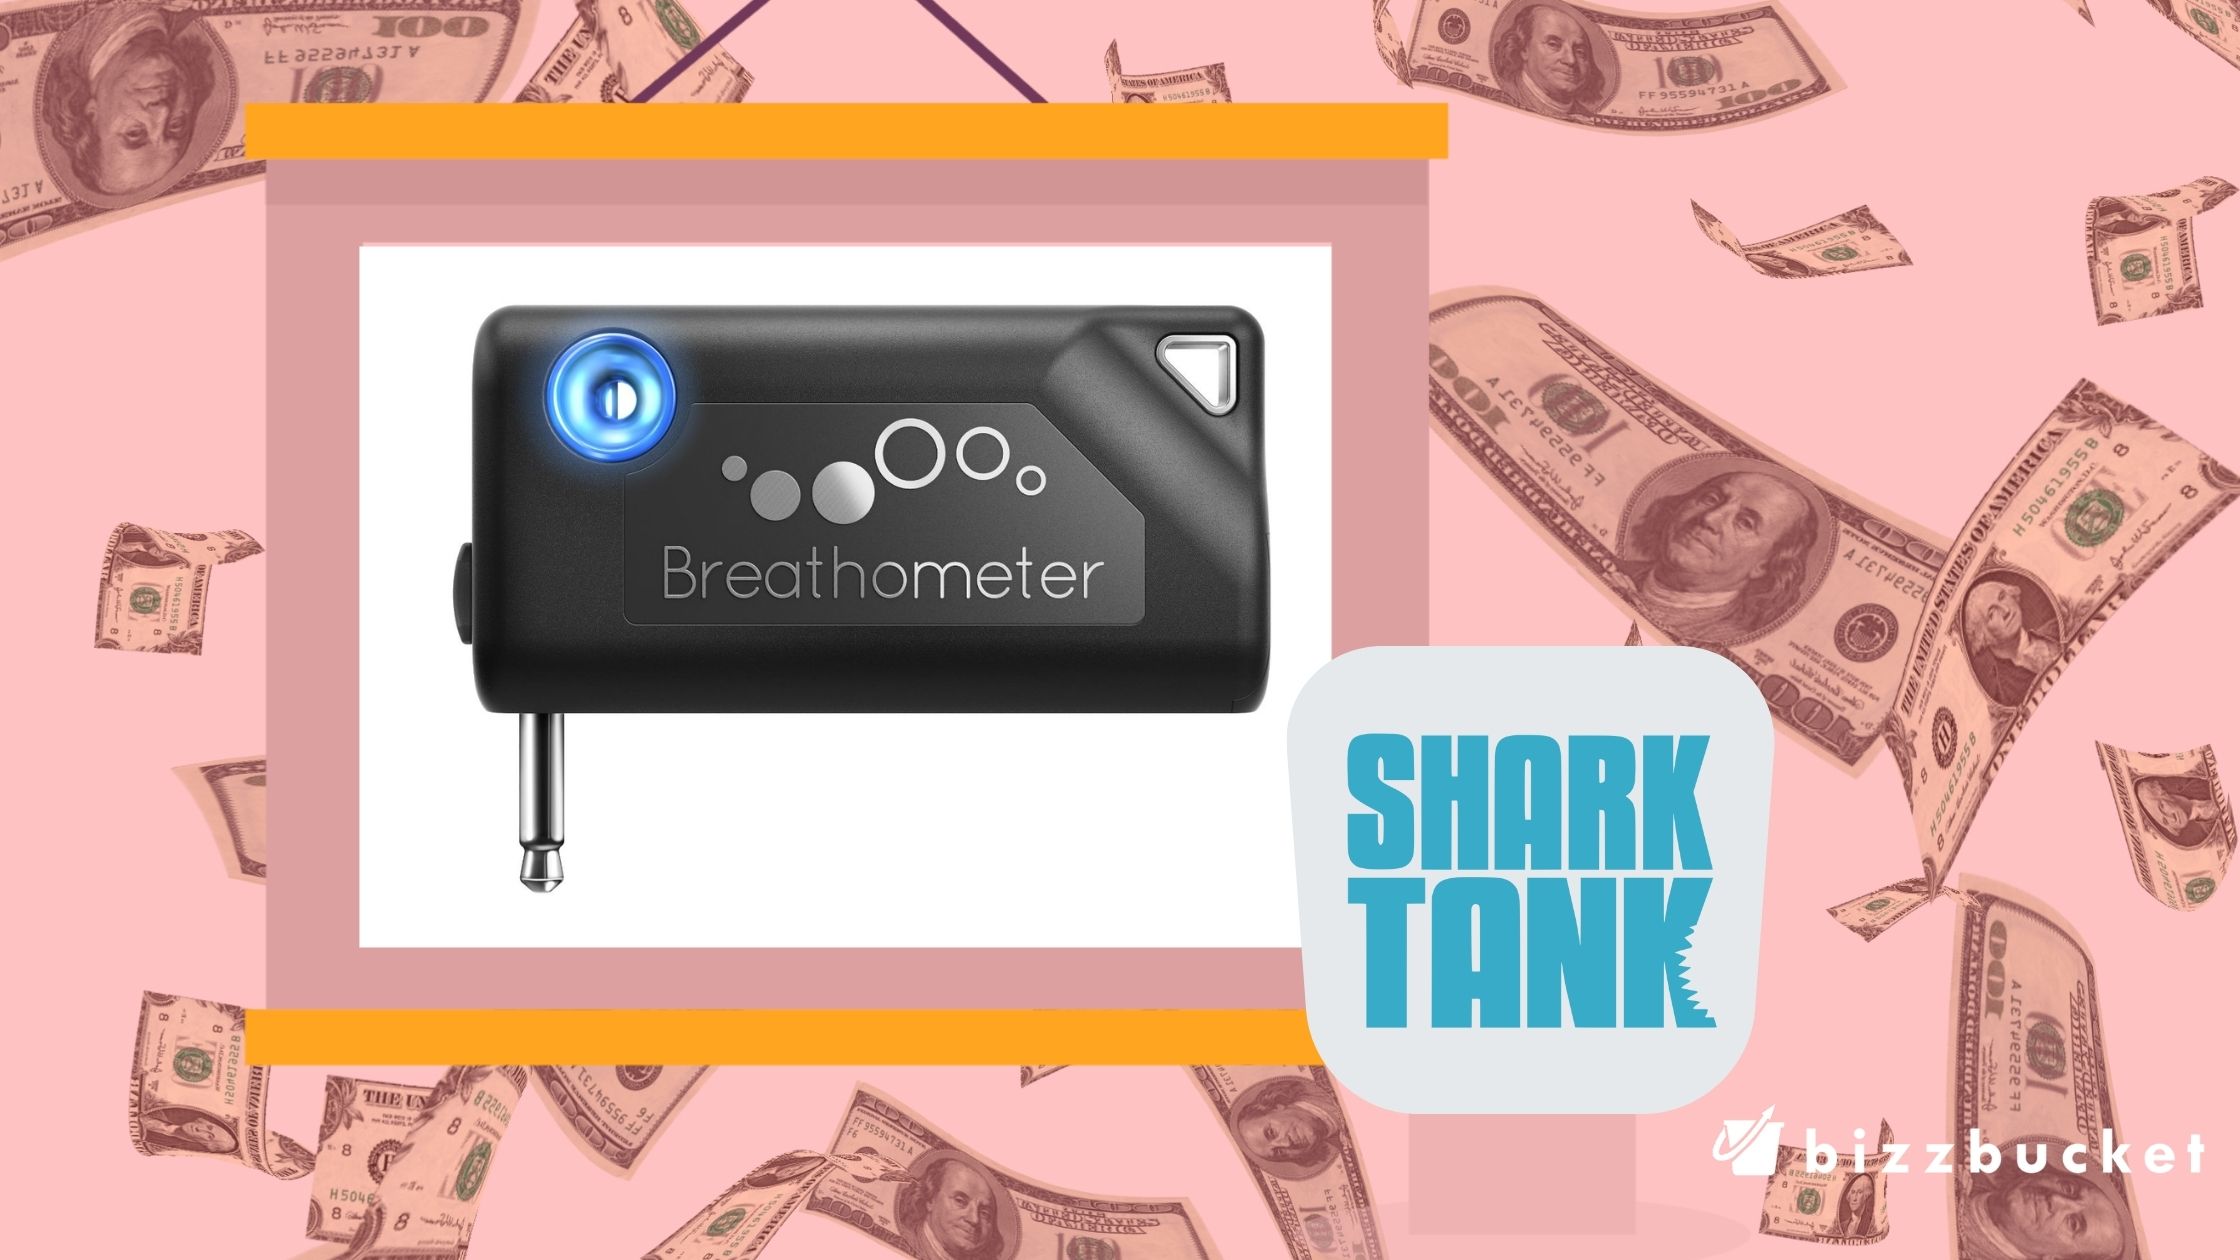 Breathometer shark tank update